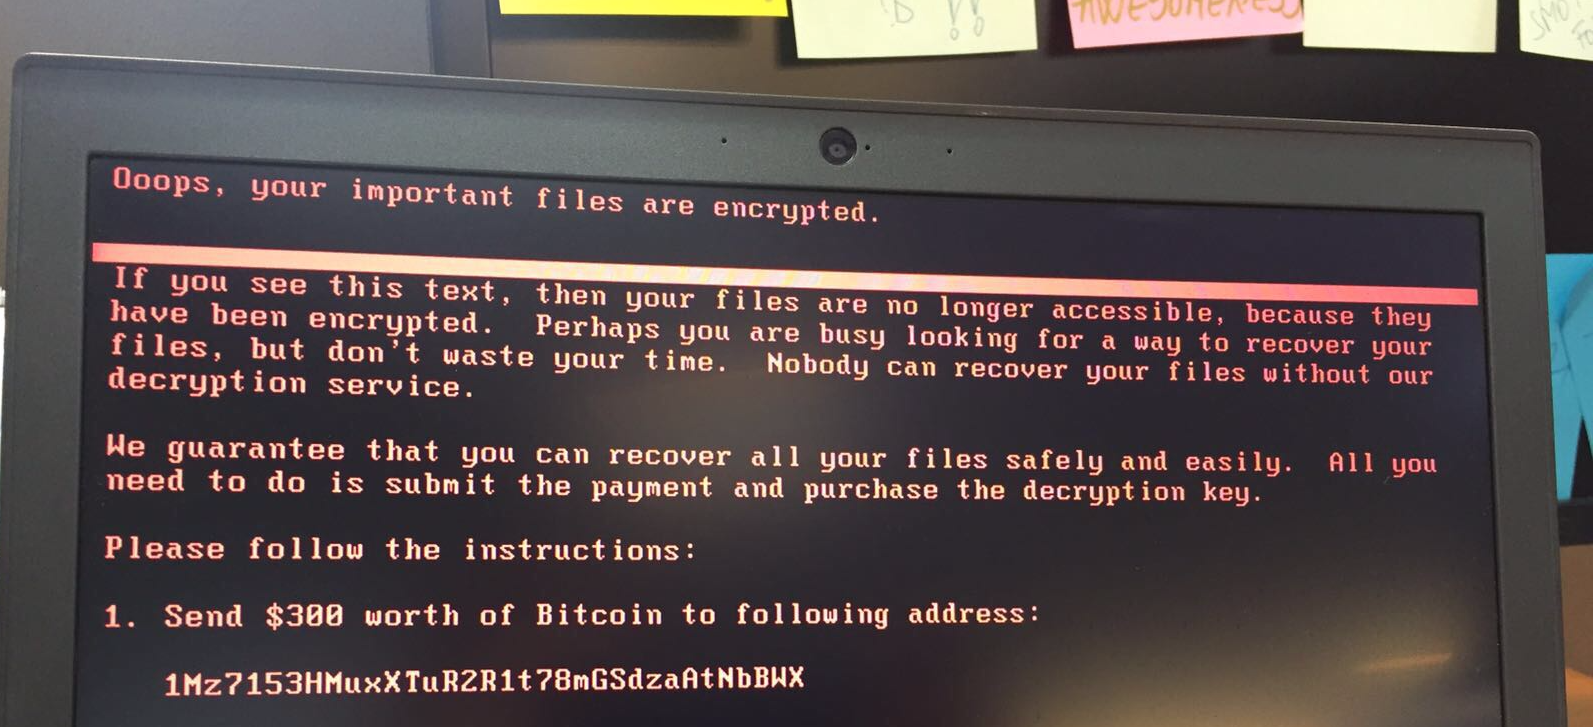 WannaCry, GoldenEye ransomware waves ravage companies’ resistance to cyberattacks